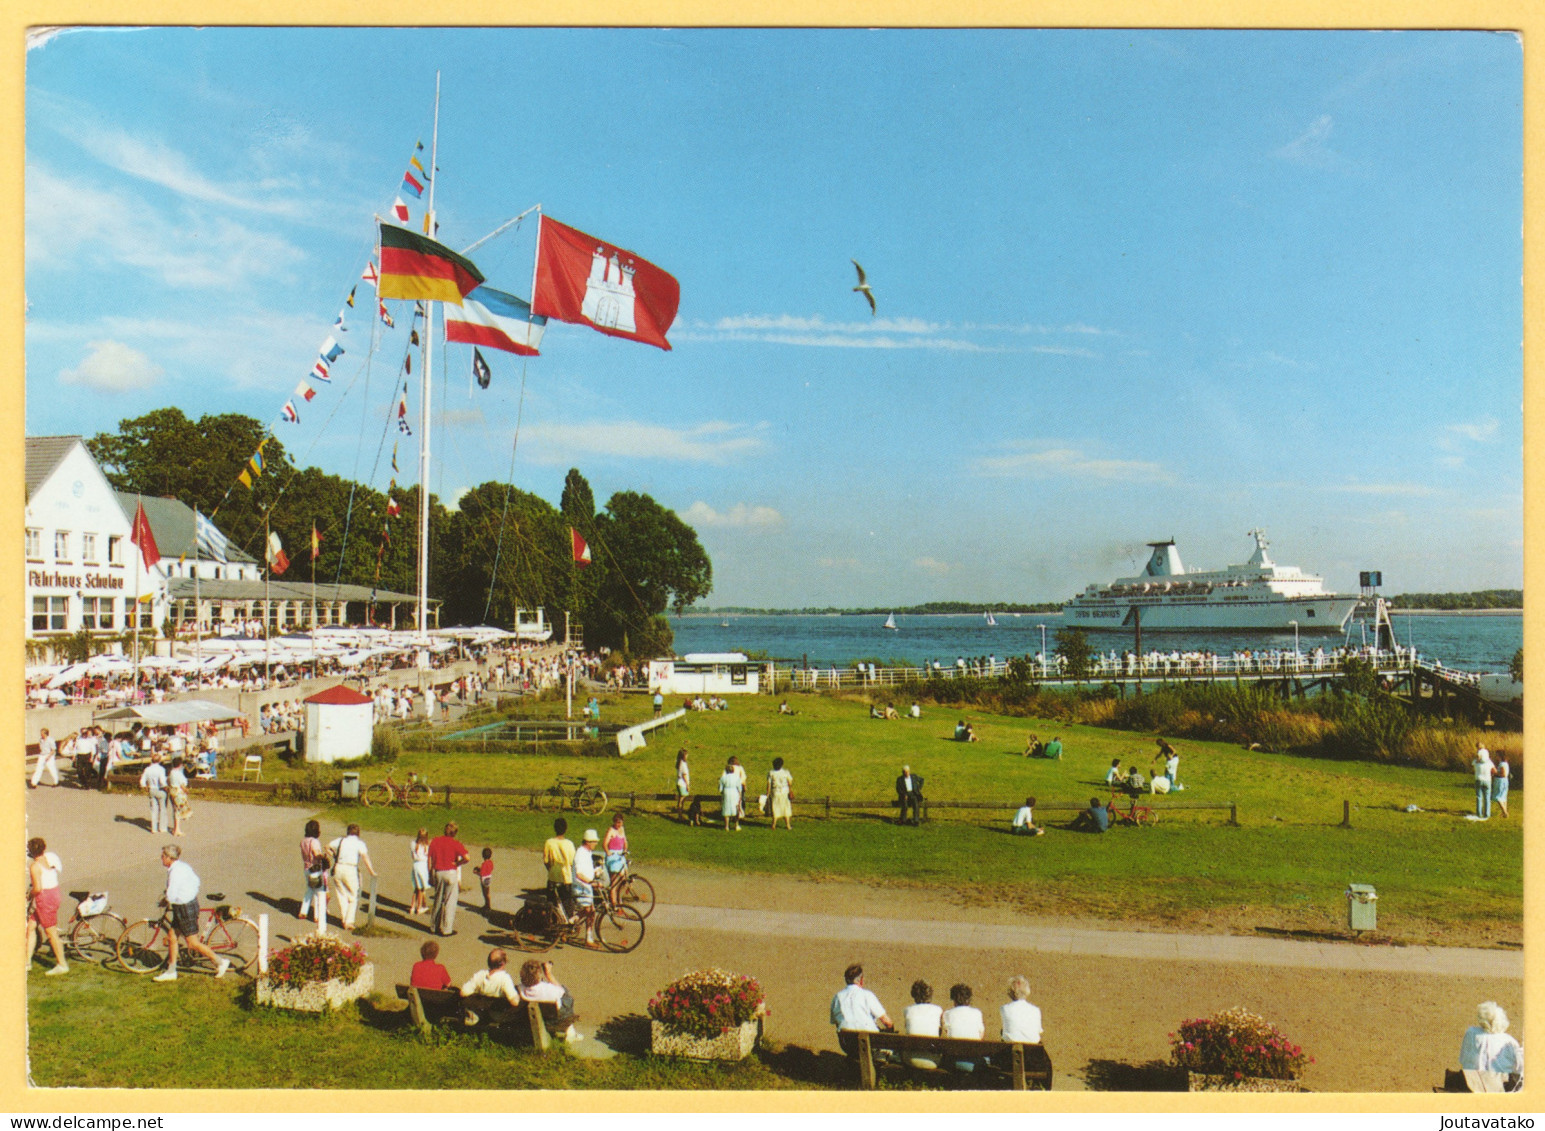 Wedel Bei Hamburg, Germany - Ship, Flag - Wedel